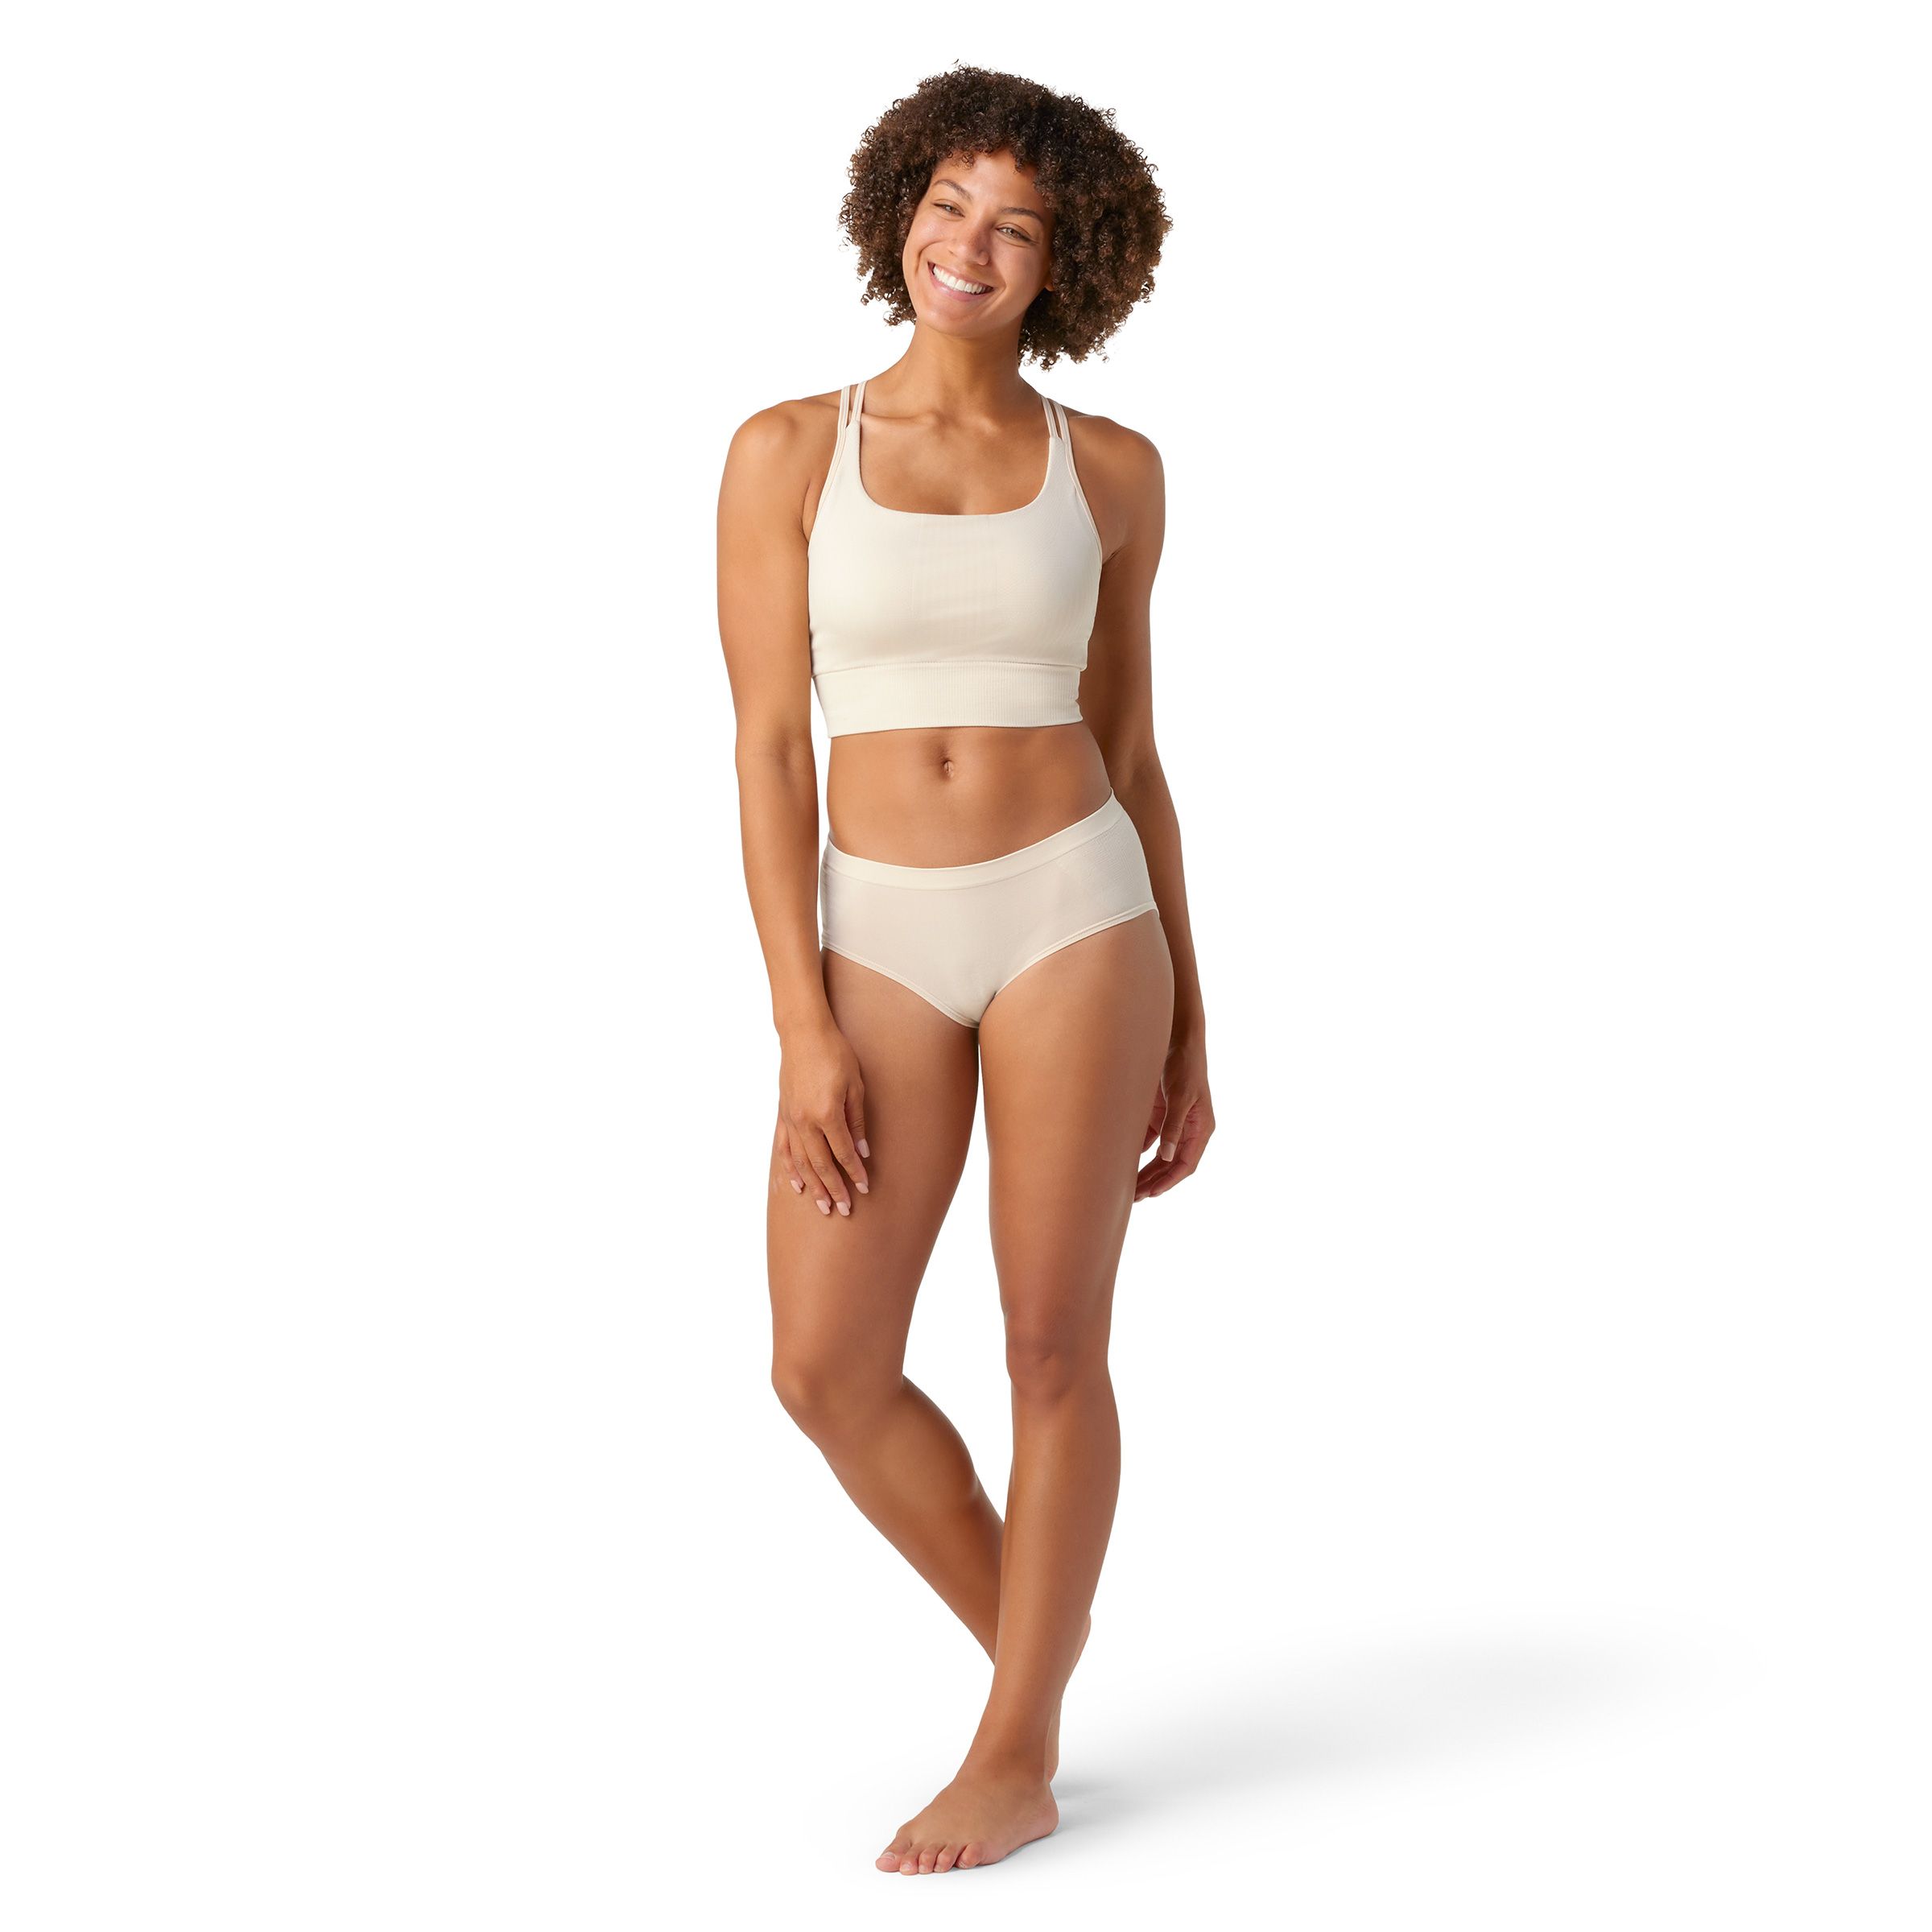 Whistler Mall W Seamless Underwear Set - Women's technical base layer